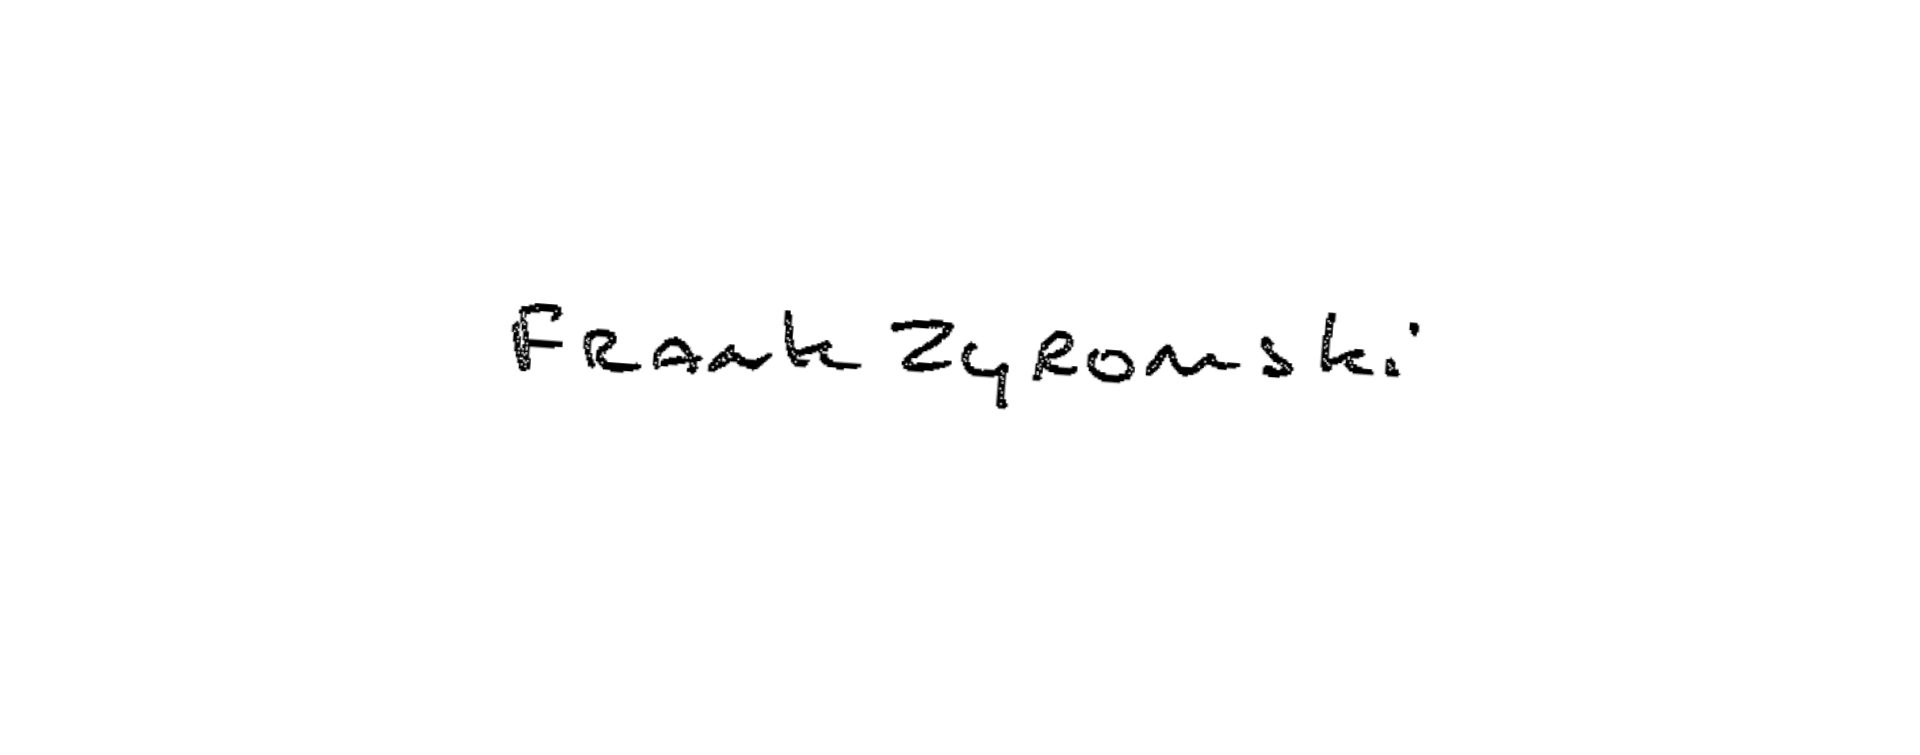 Chalky black hand-written name of Frank Zyromski on a white background